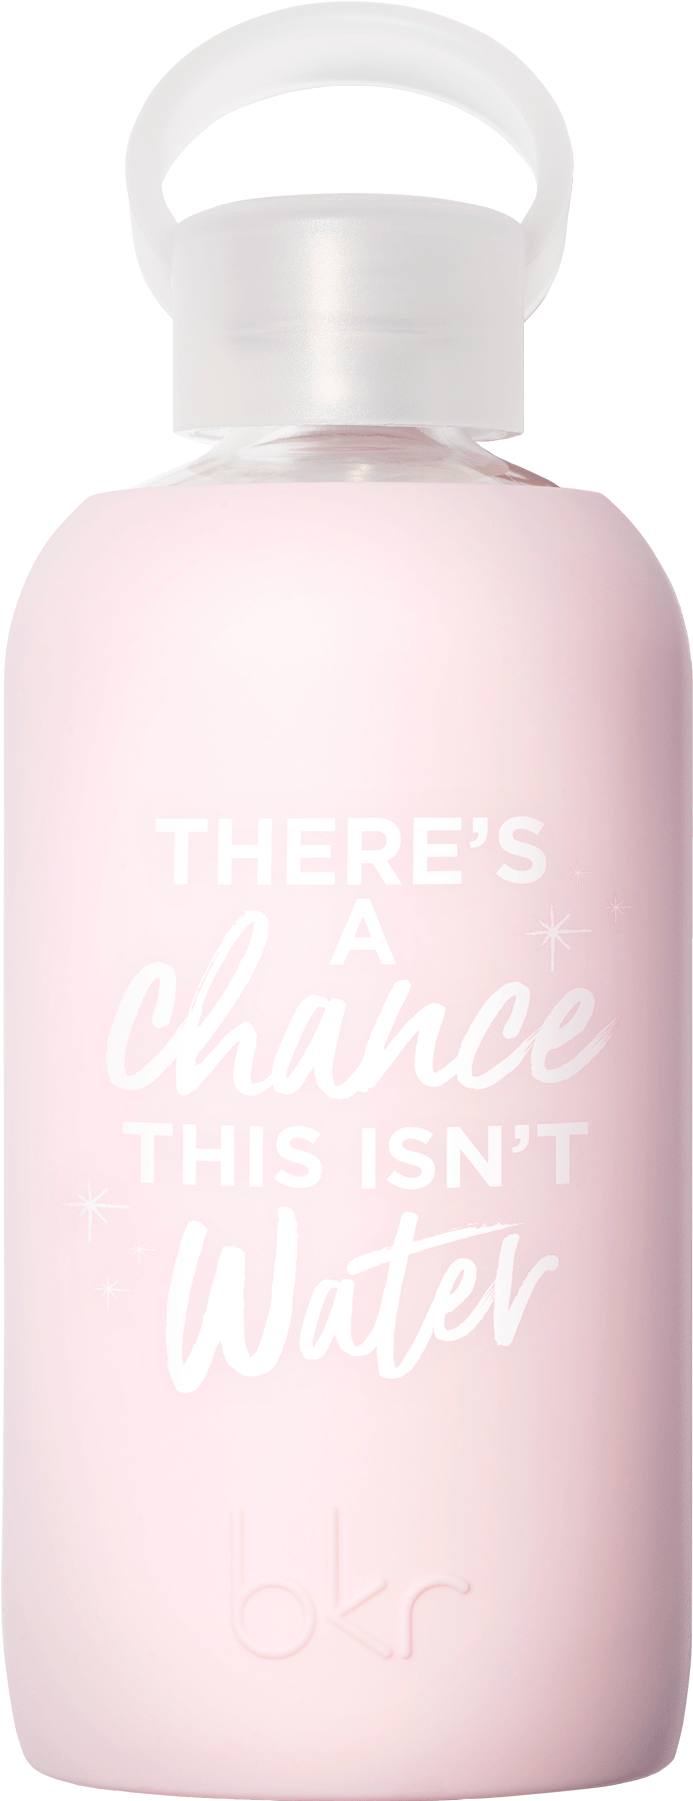 Humorous Pink Water Bottle PNG image